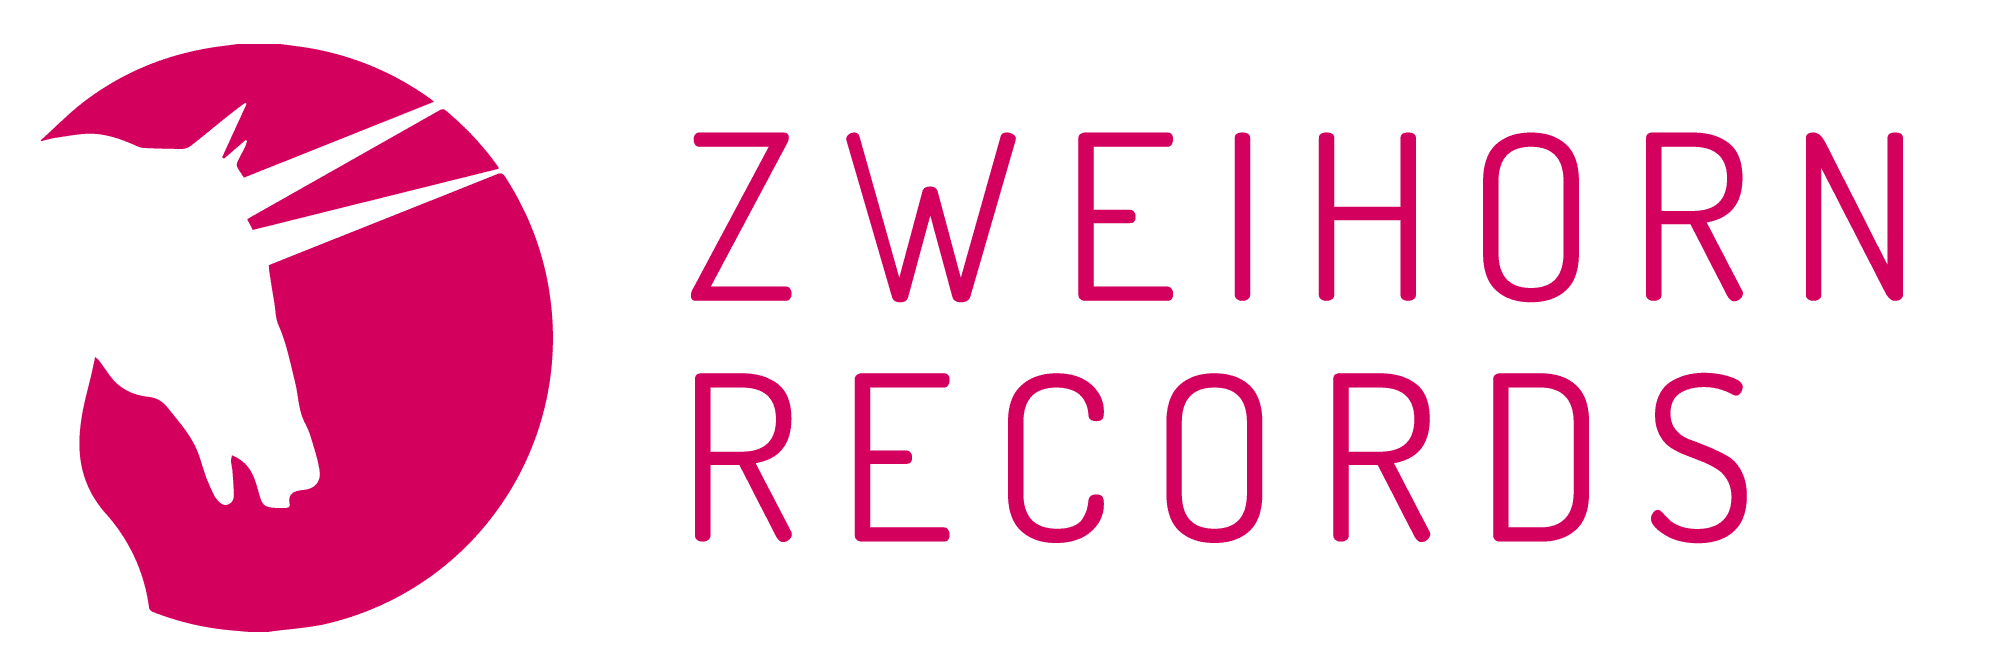 Zweihorn Records Shop